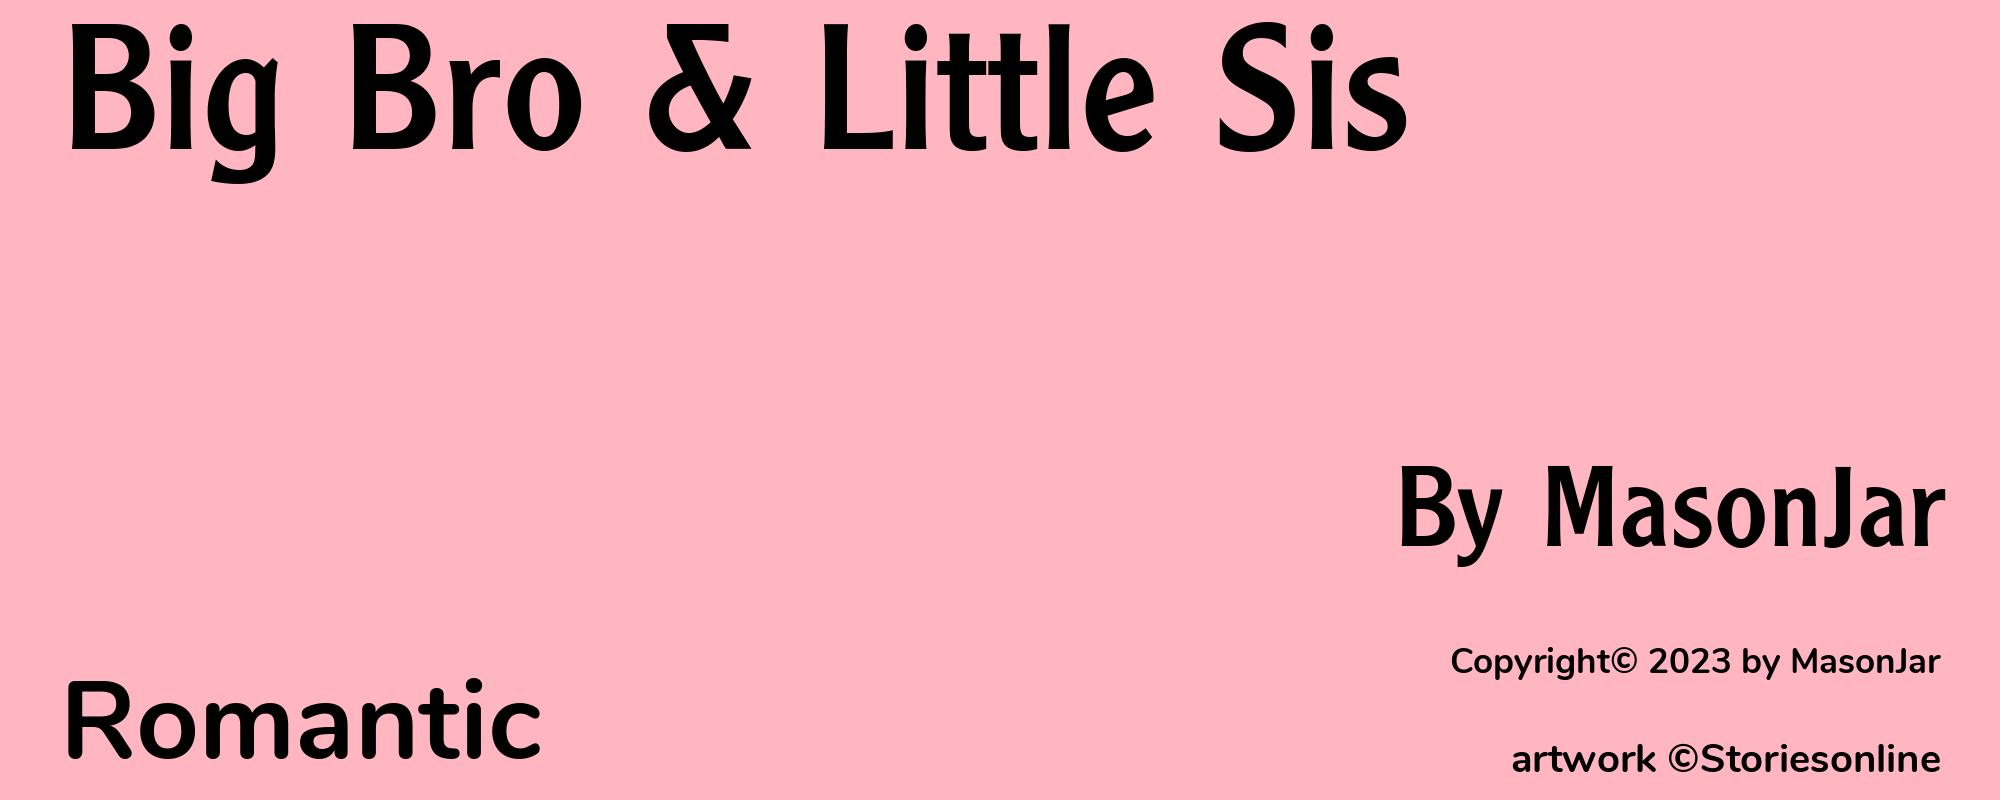 Big Bro & Little Sis - Cover